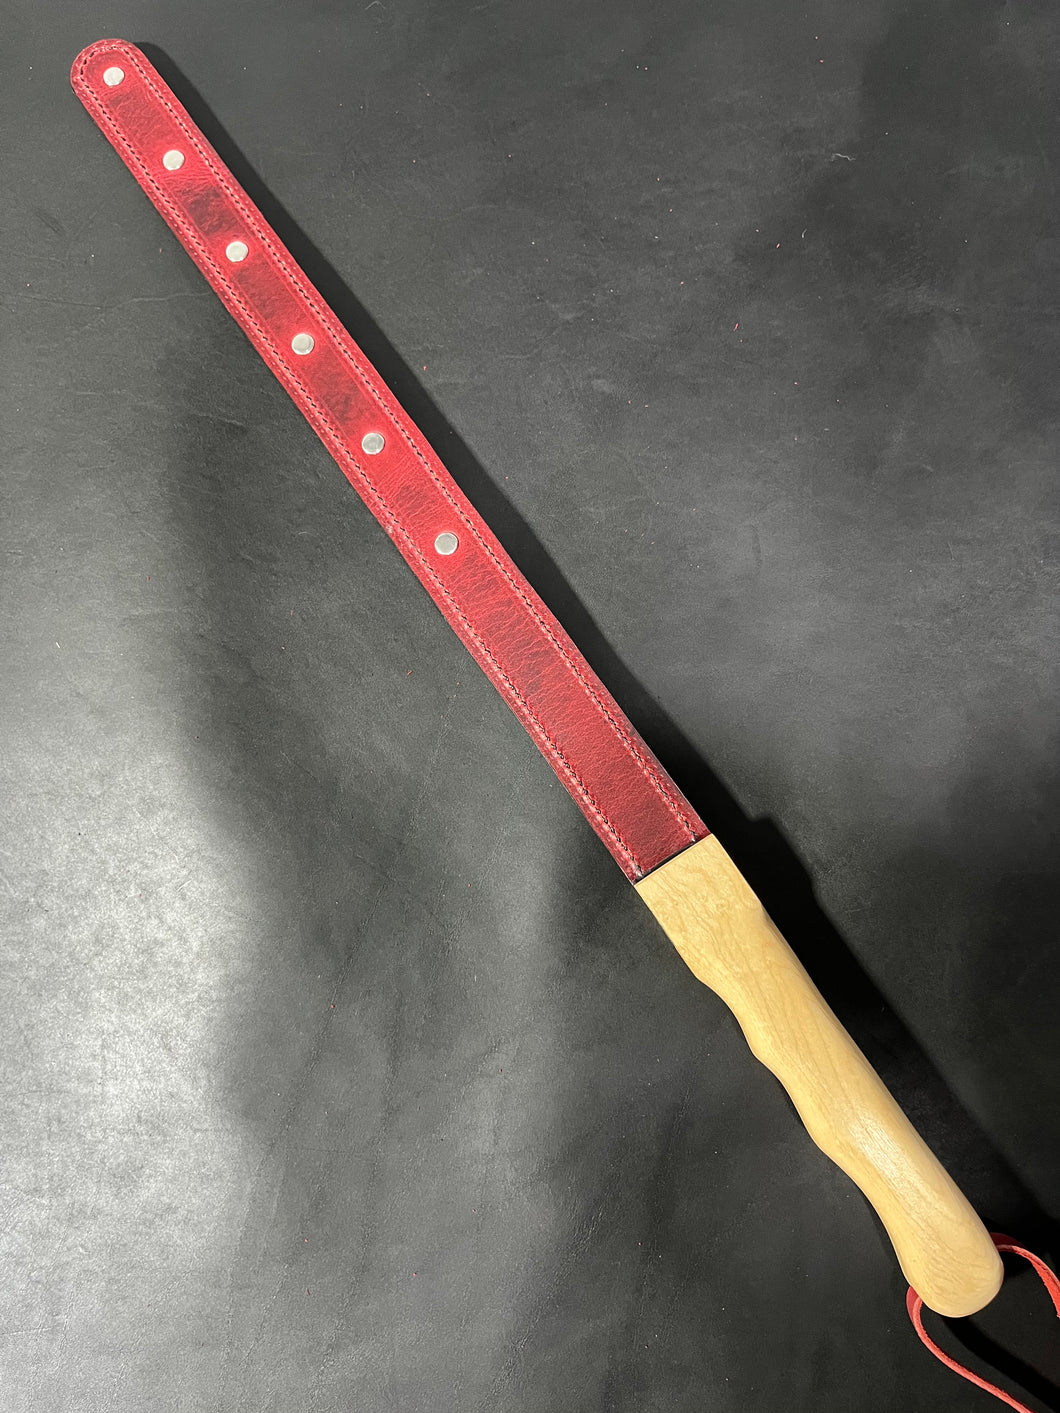 Strap: Red Latigo strap with Birdseye maple handle and rivets